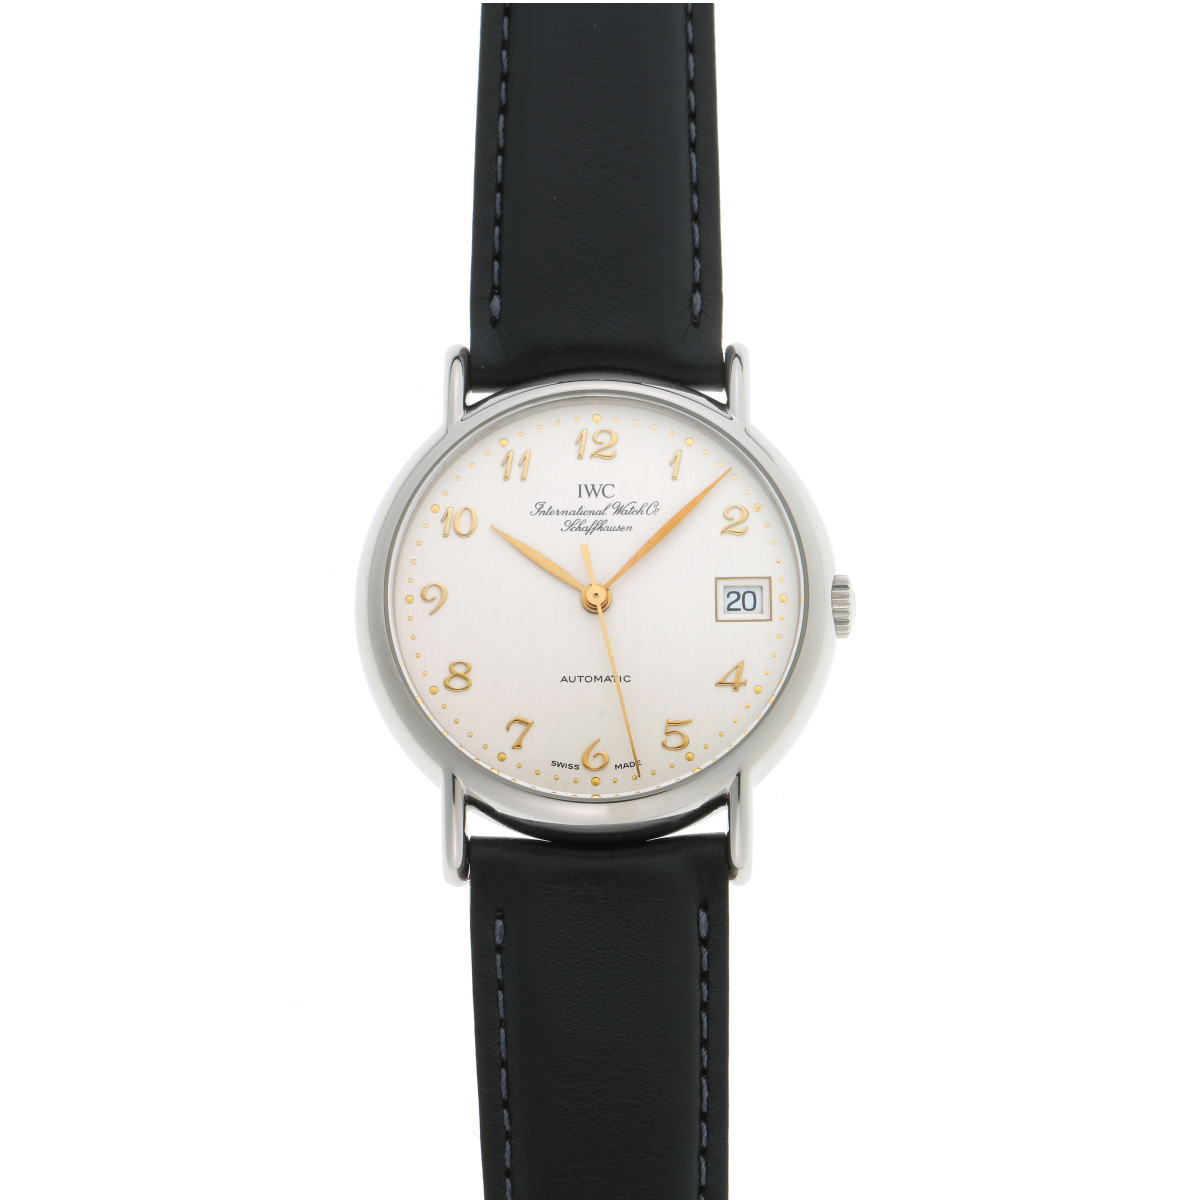 IWC Inter National часы Company Portofino автоматический Cal.37521 IW3513 SS мужской часы 2310169